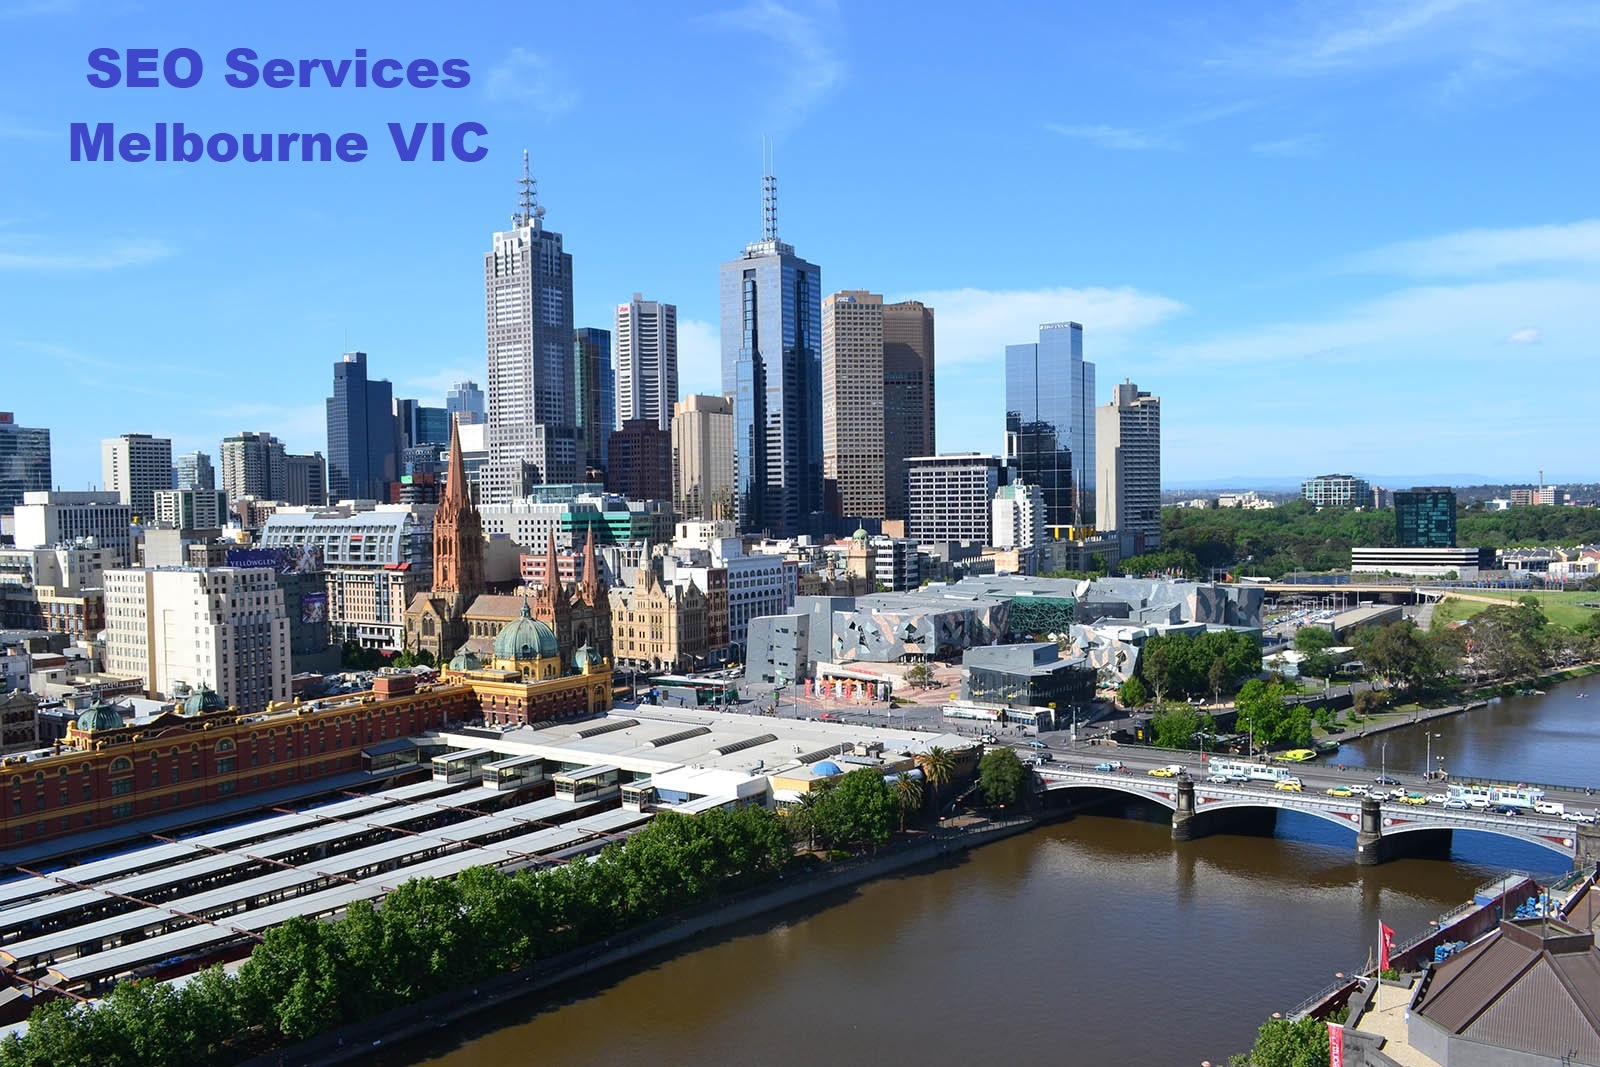 SEO Services in Melbourne